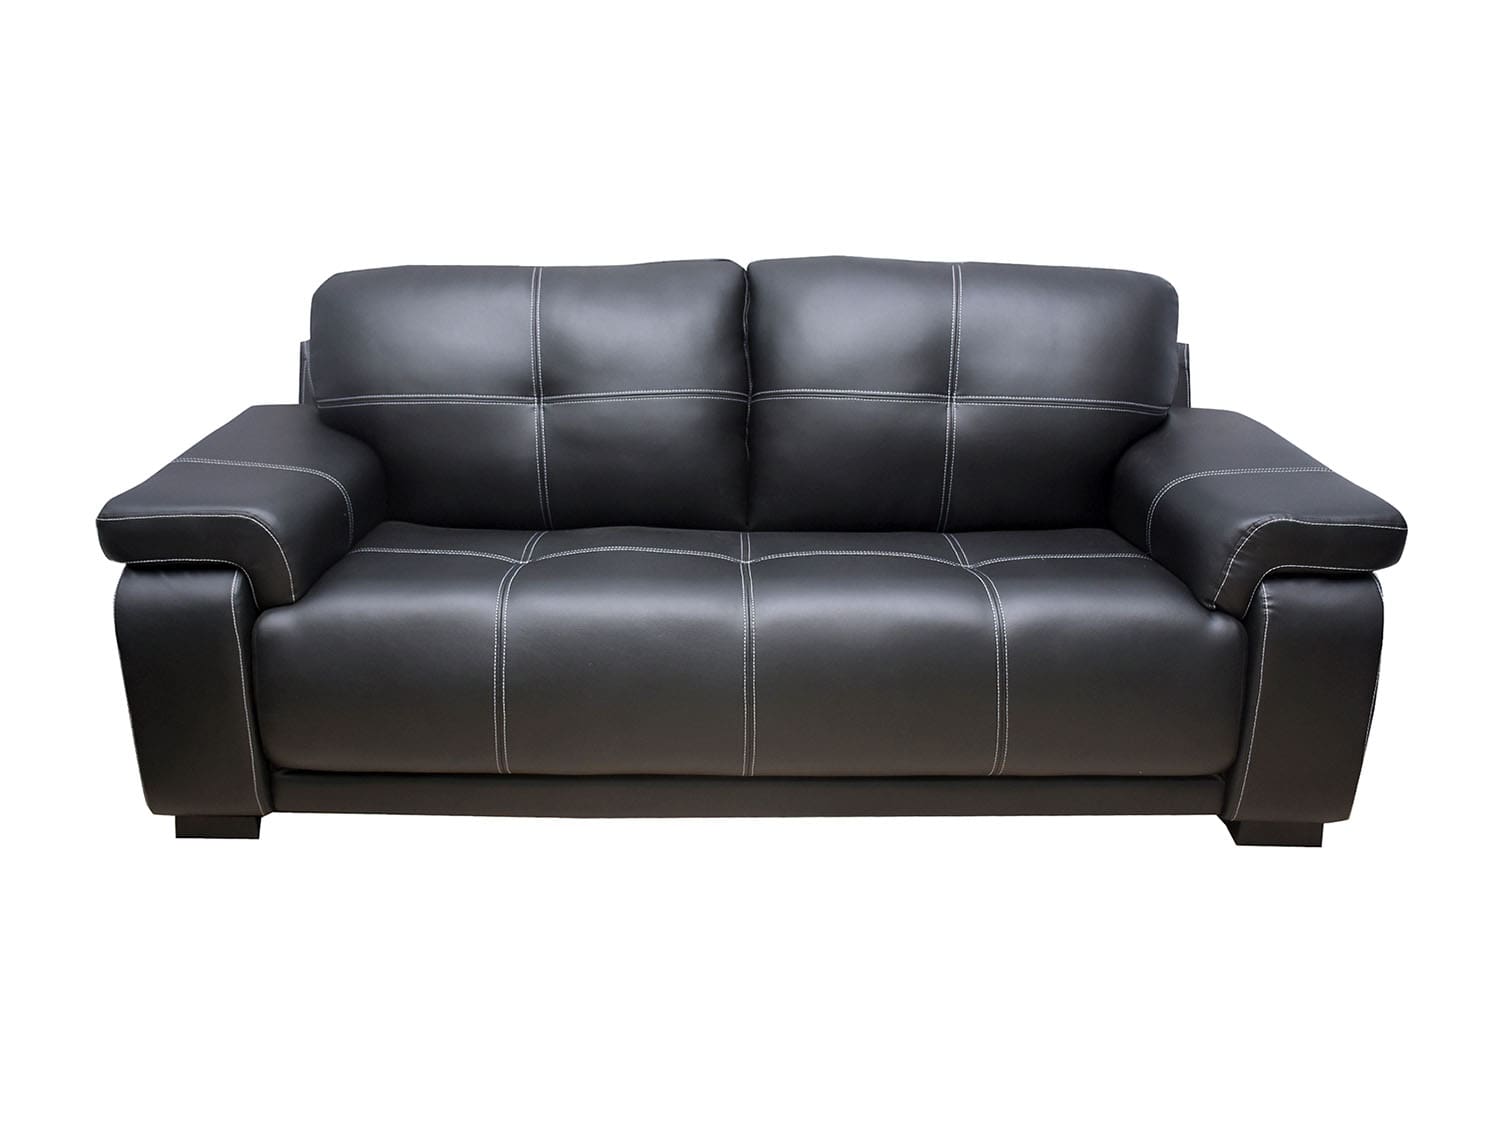 Neo Ritzy Sofa Leatherite In, Leather Furniture Repair Orlando